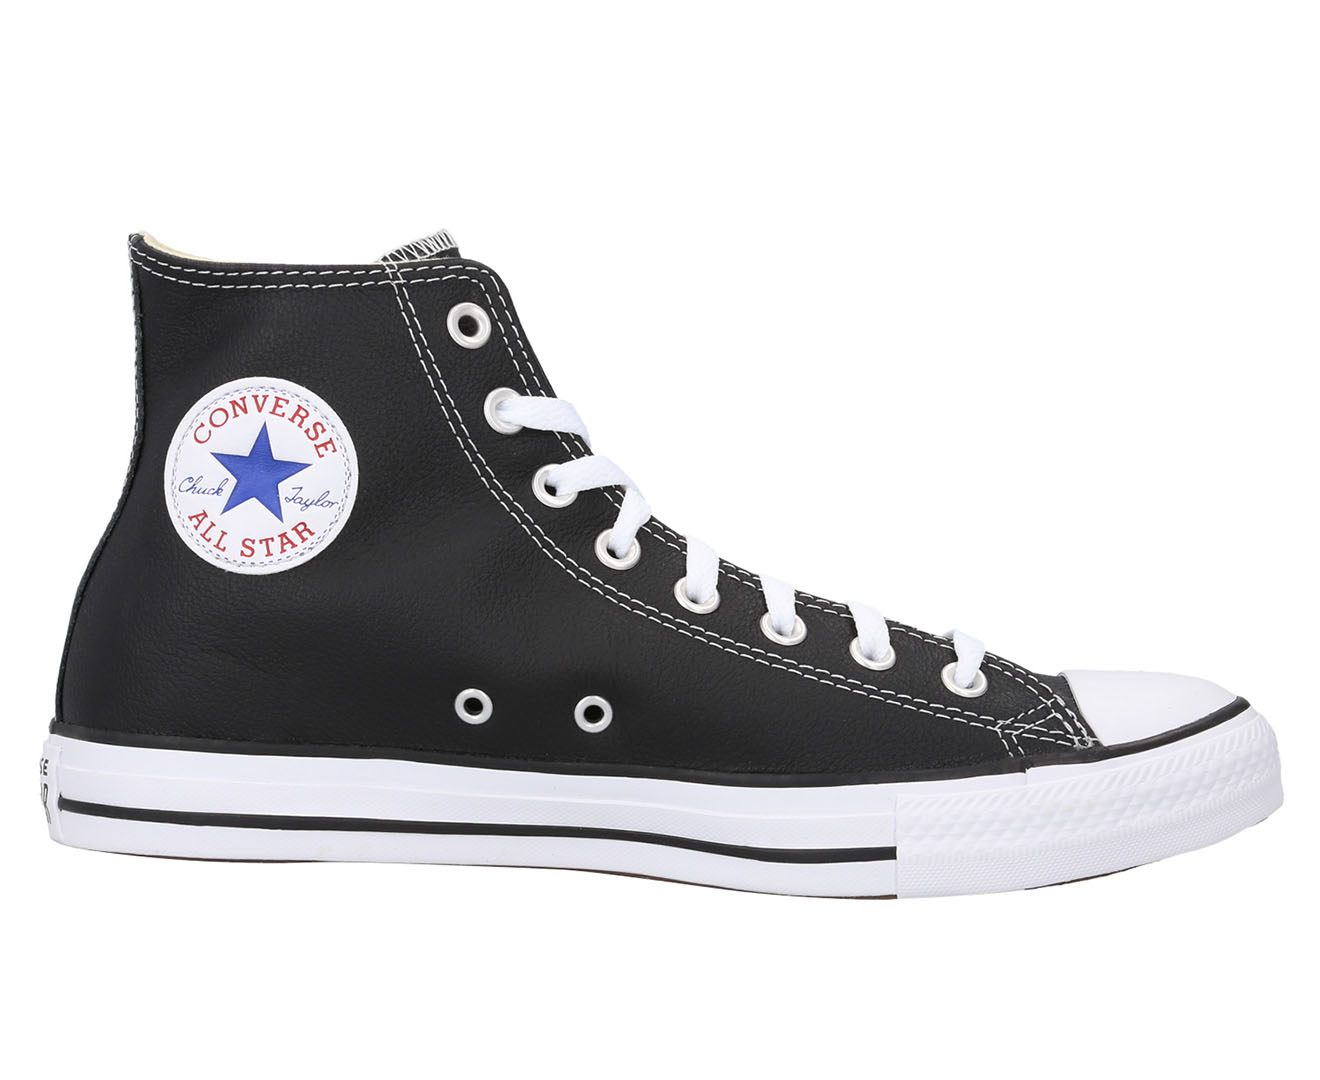 Converse Chuck Star Leather High Top Sneakers - Black | M.catch.com.au